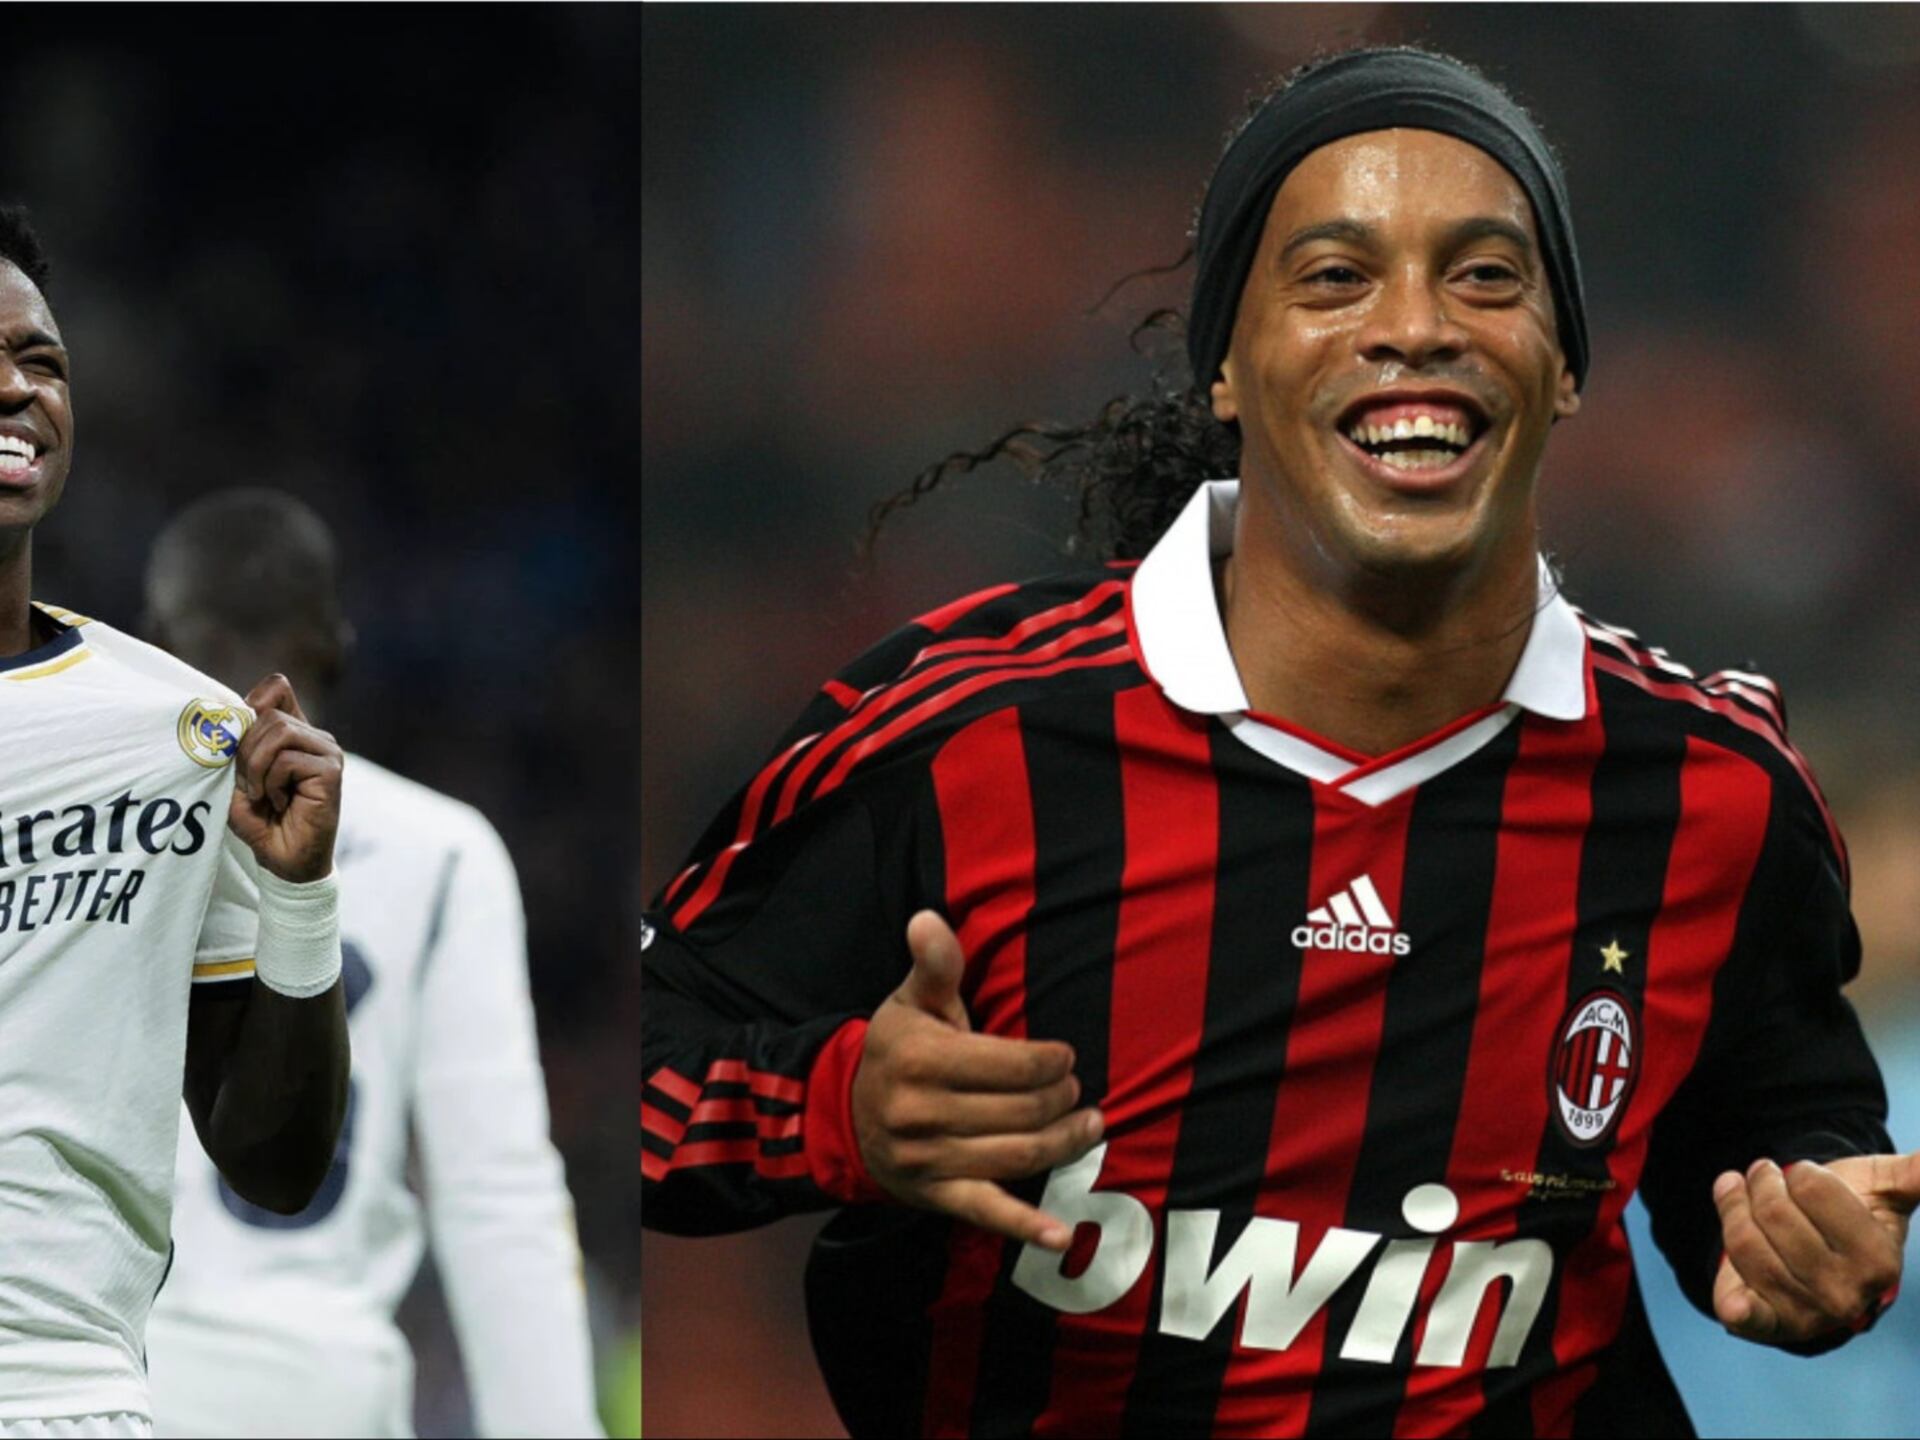 While Vinicius is shining, ex-AC Milan coach says Ronaldinho lacked discipline